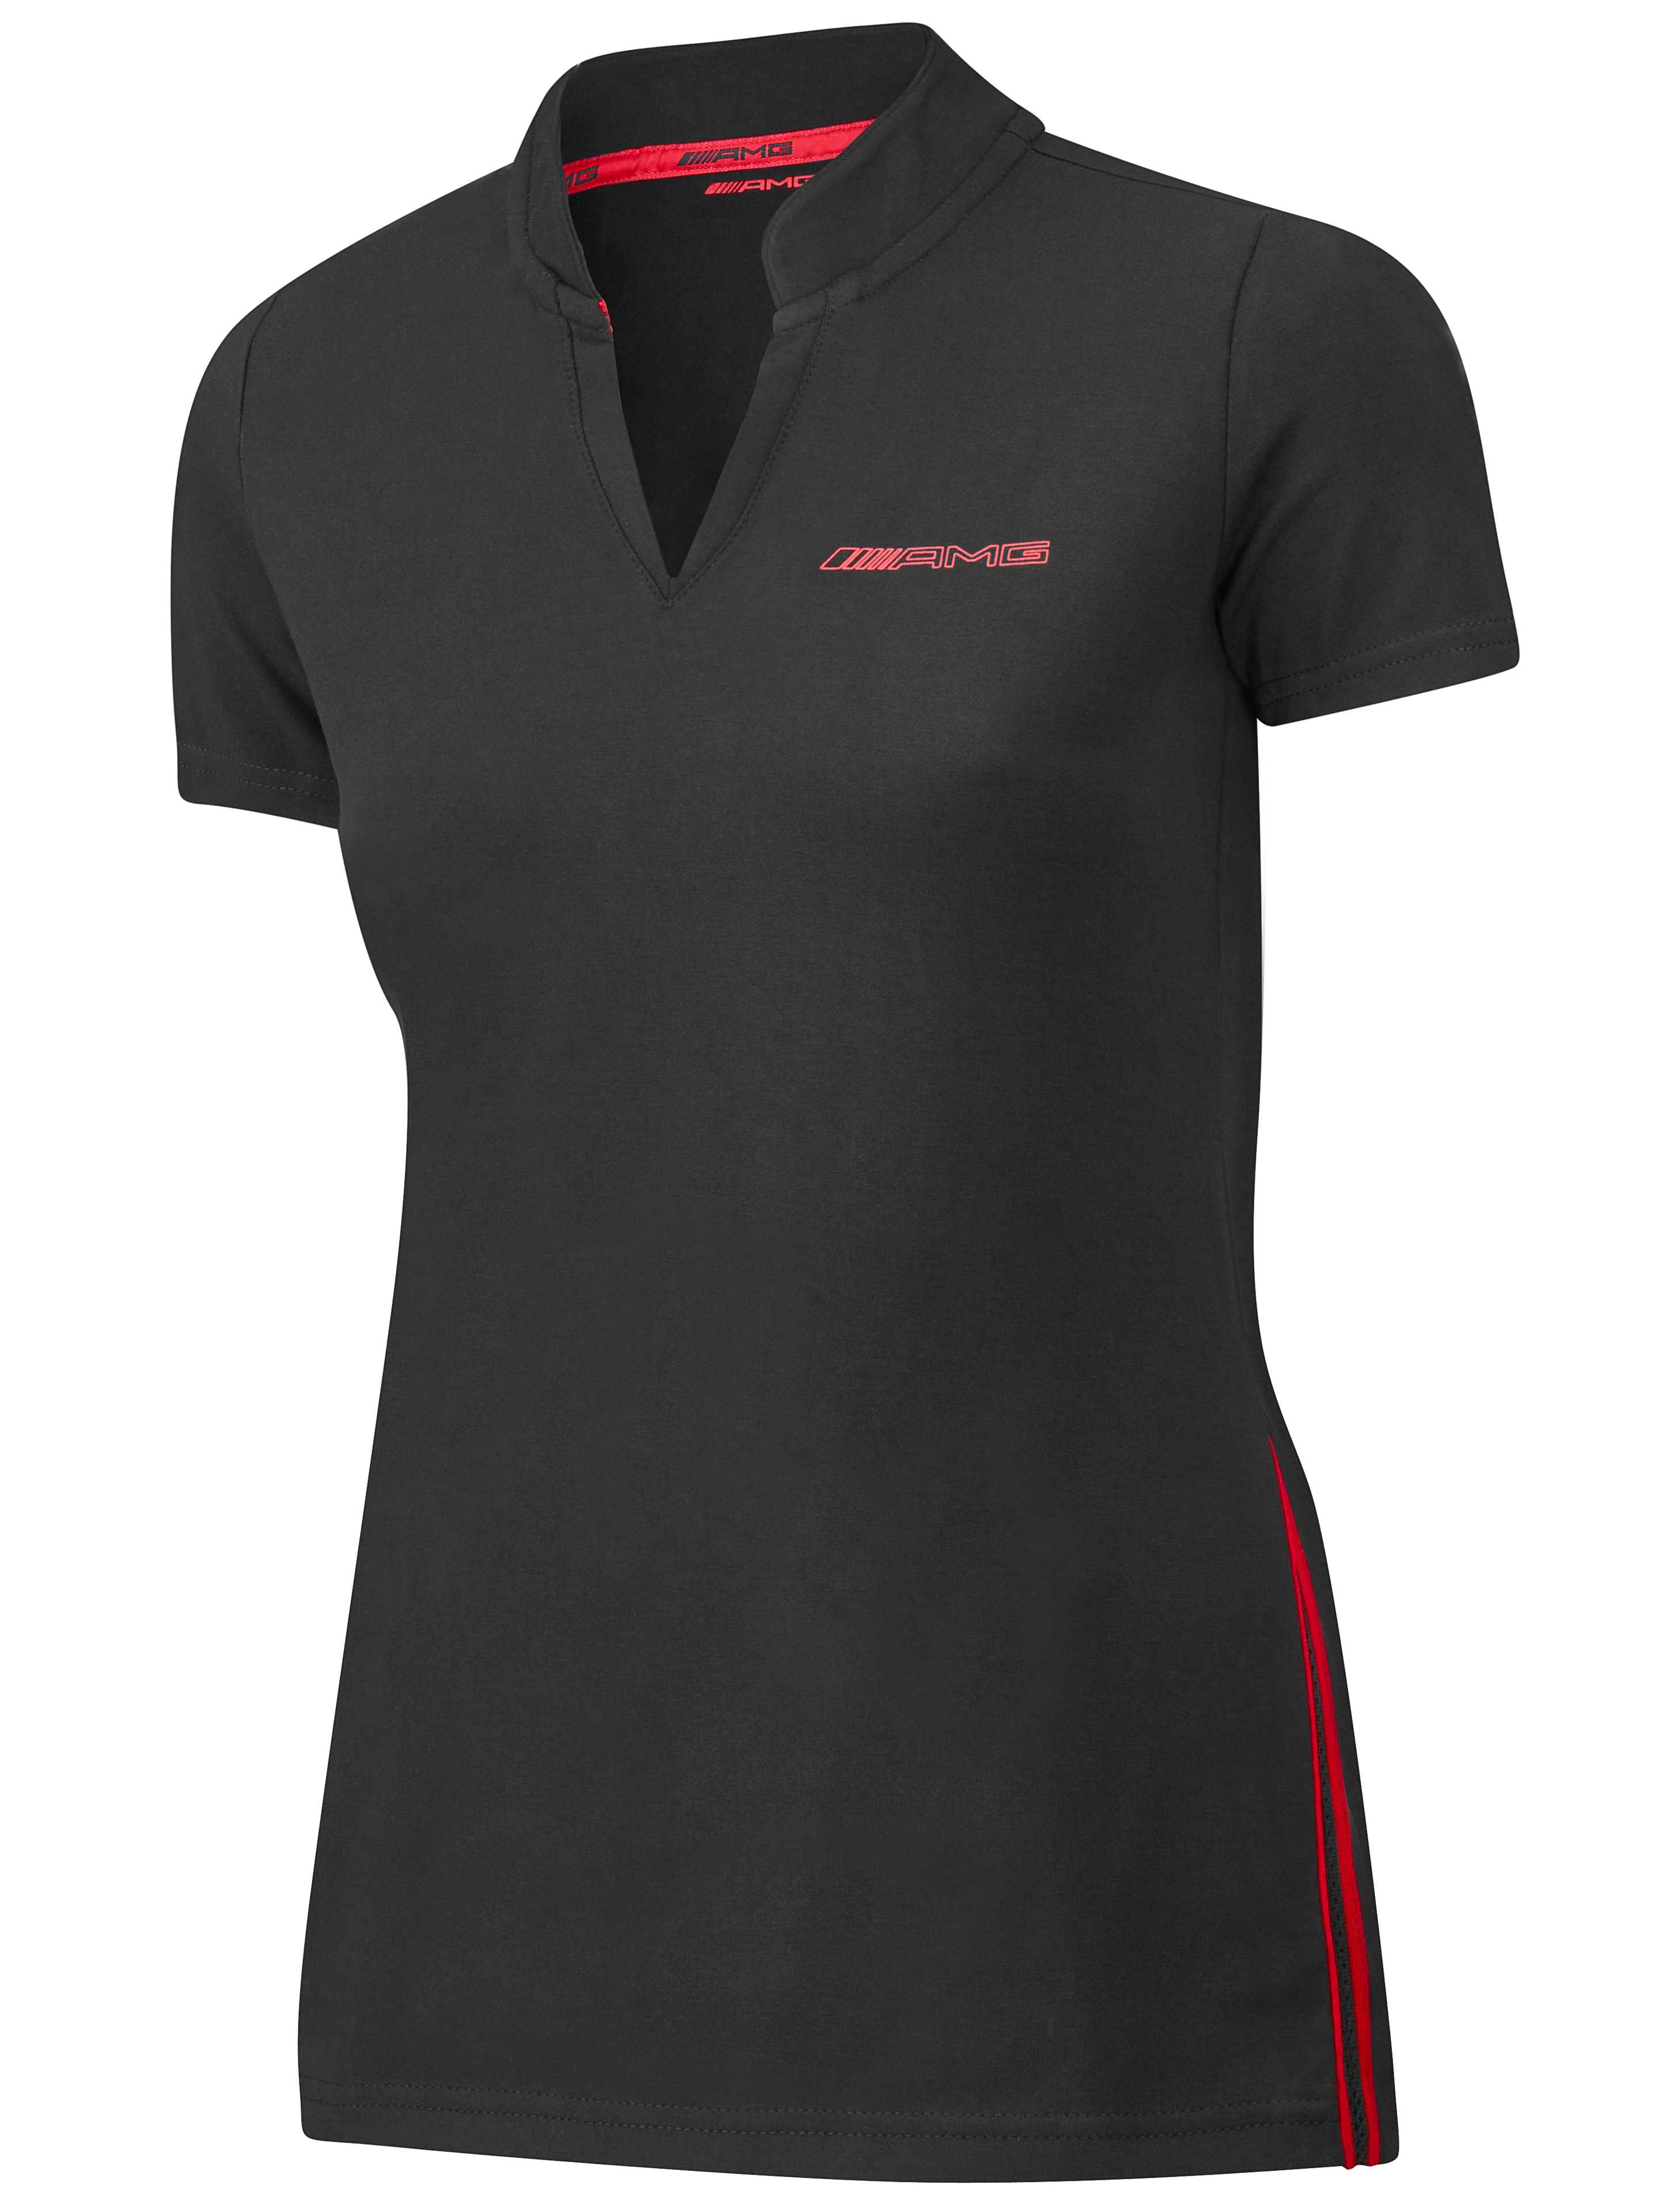 AMG Poloshirt Damen - schwarz / rot, L